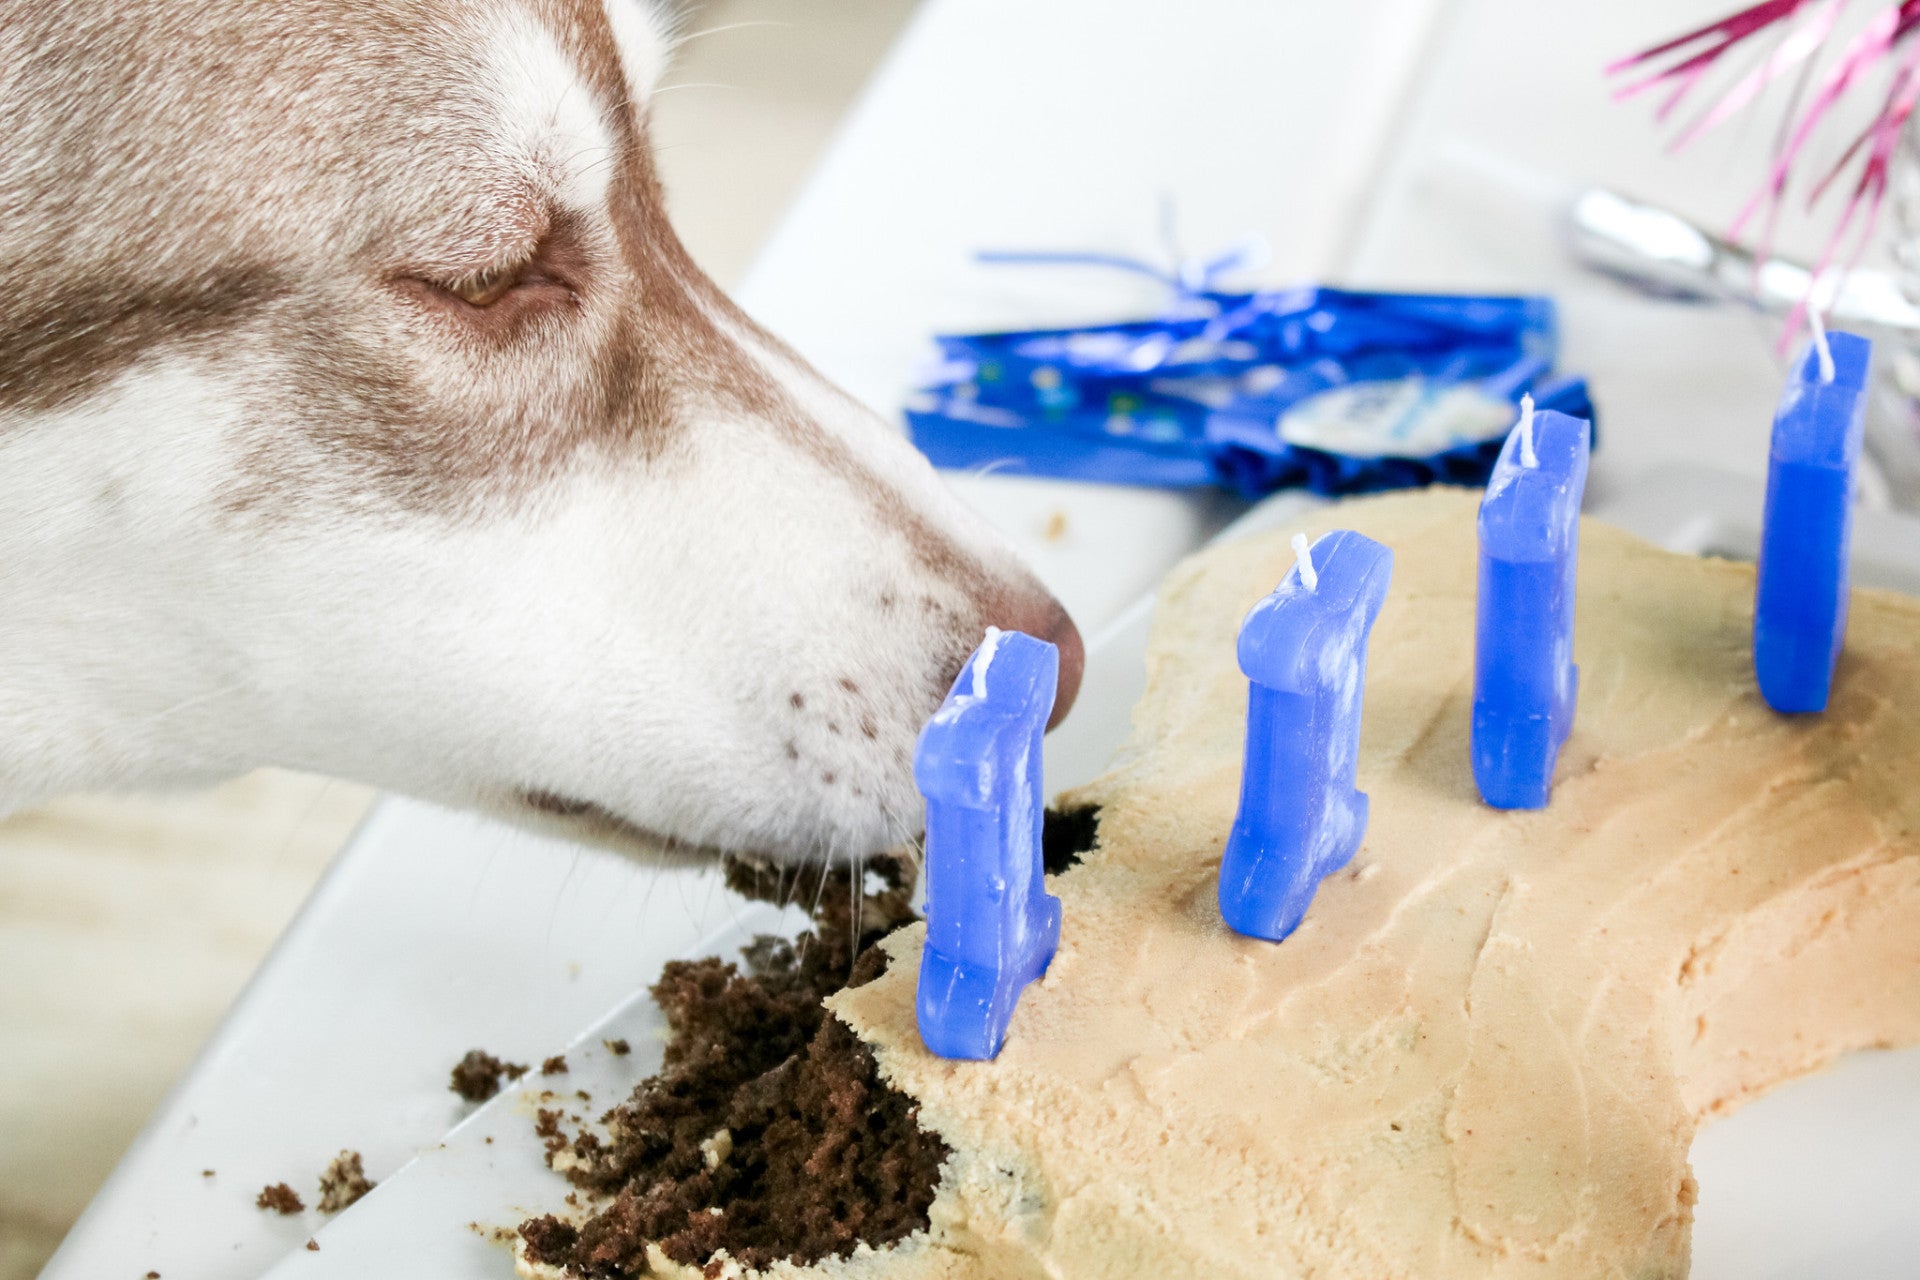 Puppy Cake Silicone Bone Cake Pan - The Pet Beastro - The Pet Beastro